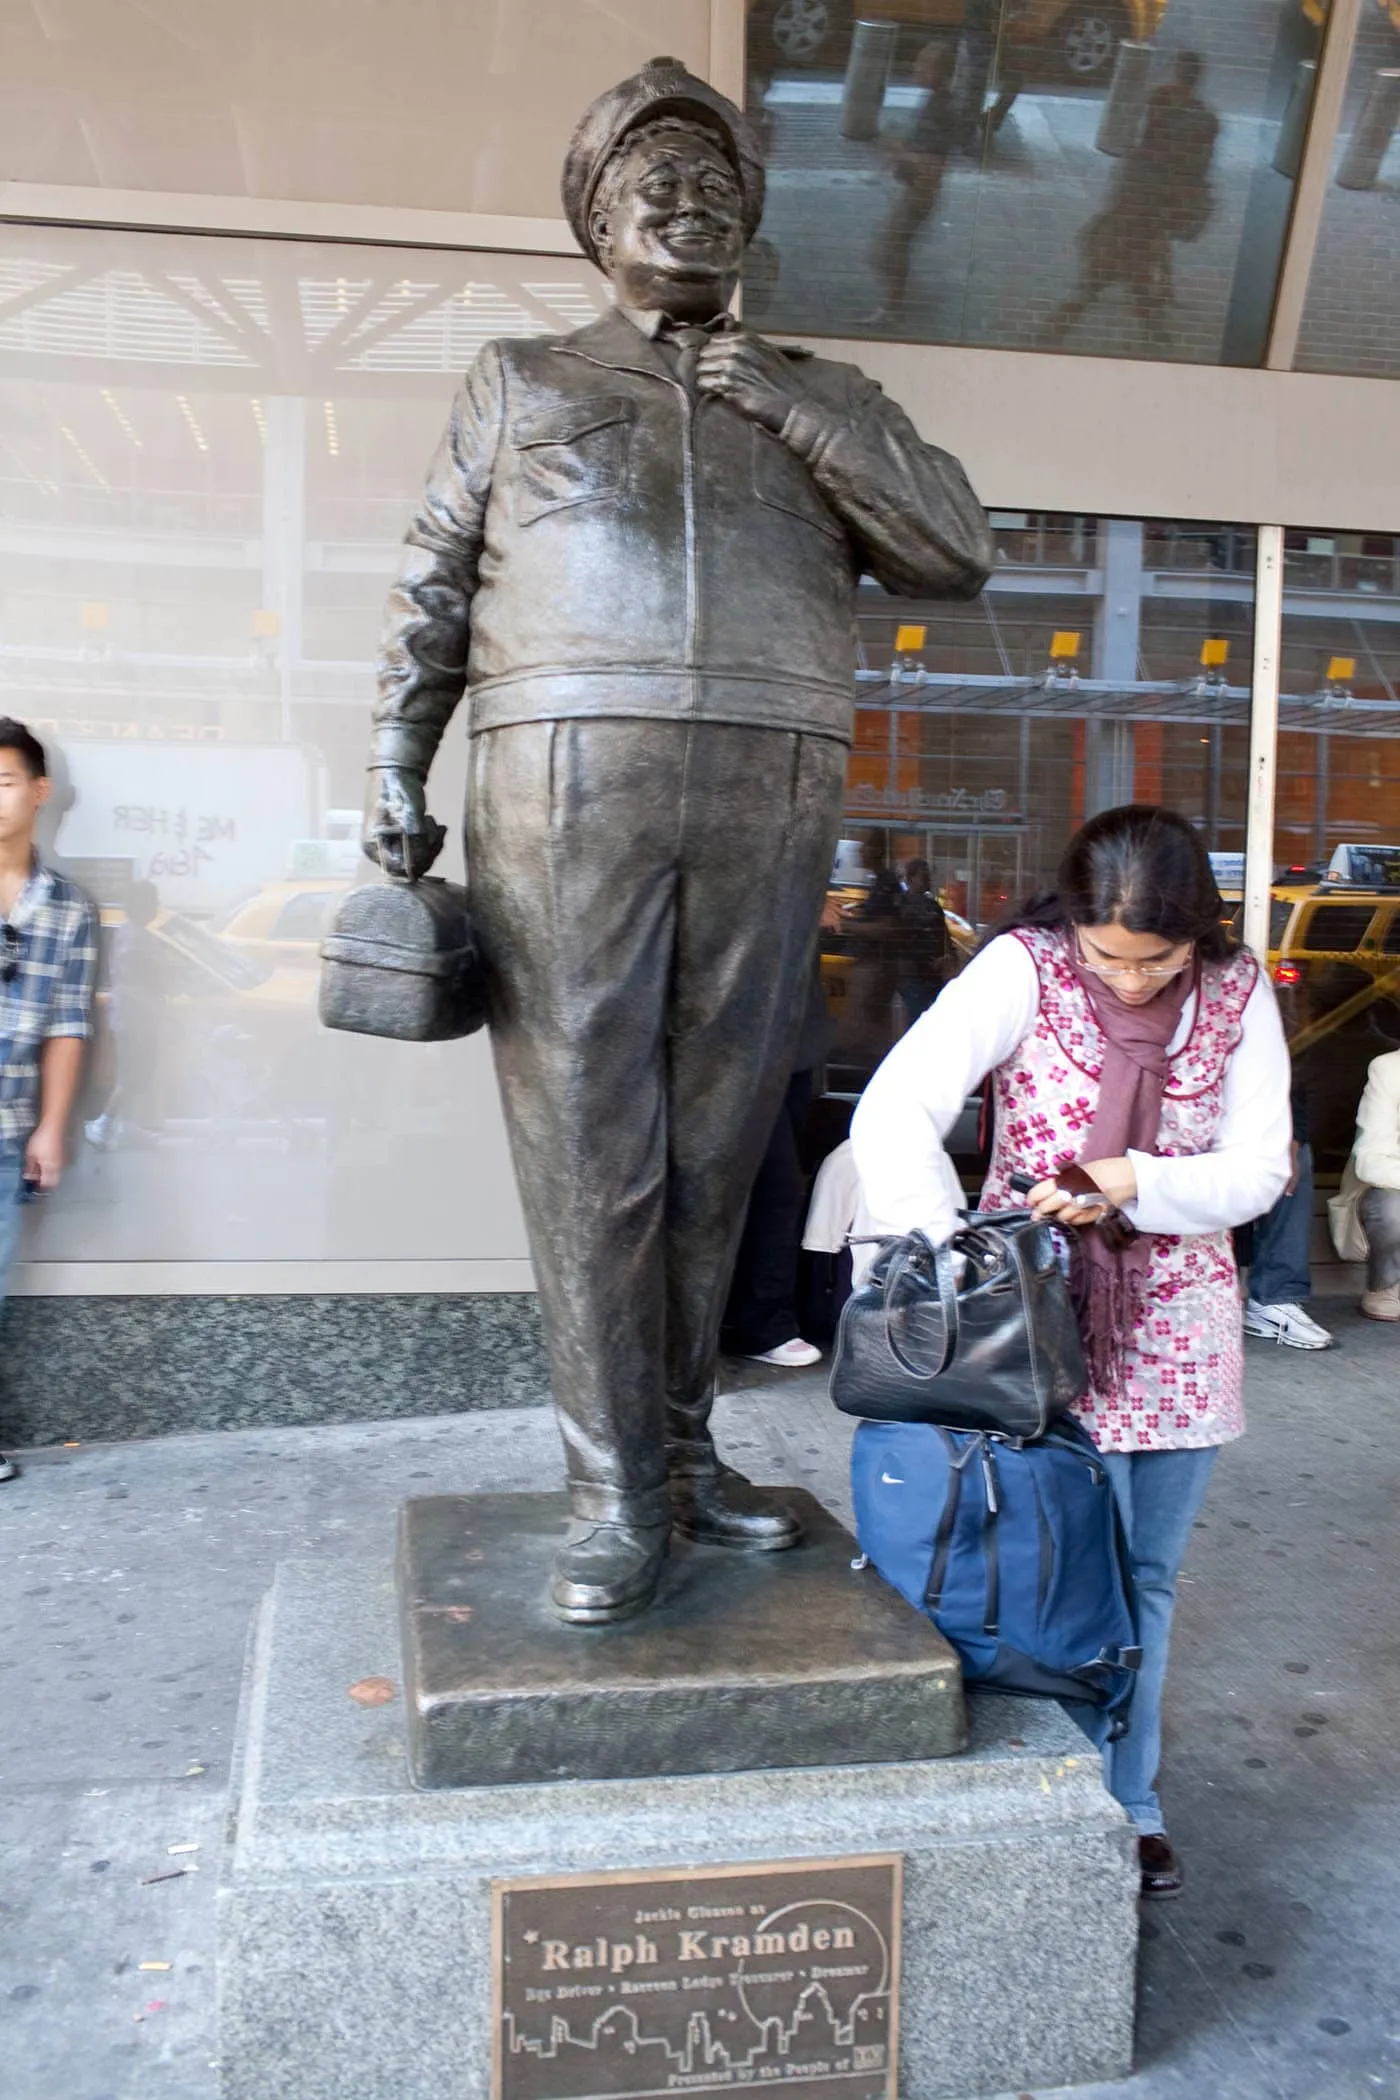 Ralph Kramden Statue of Jackie Gleason from the Honeymooners at the New York City Port Authority Bus Terminal